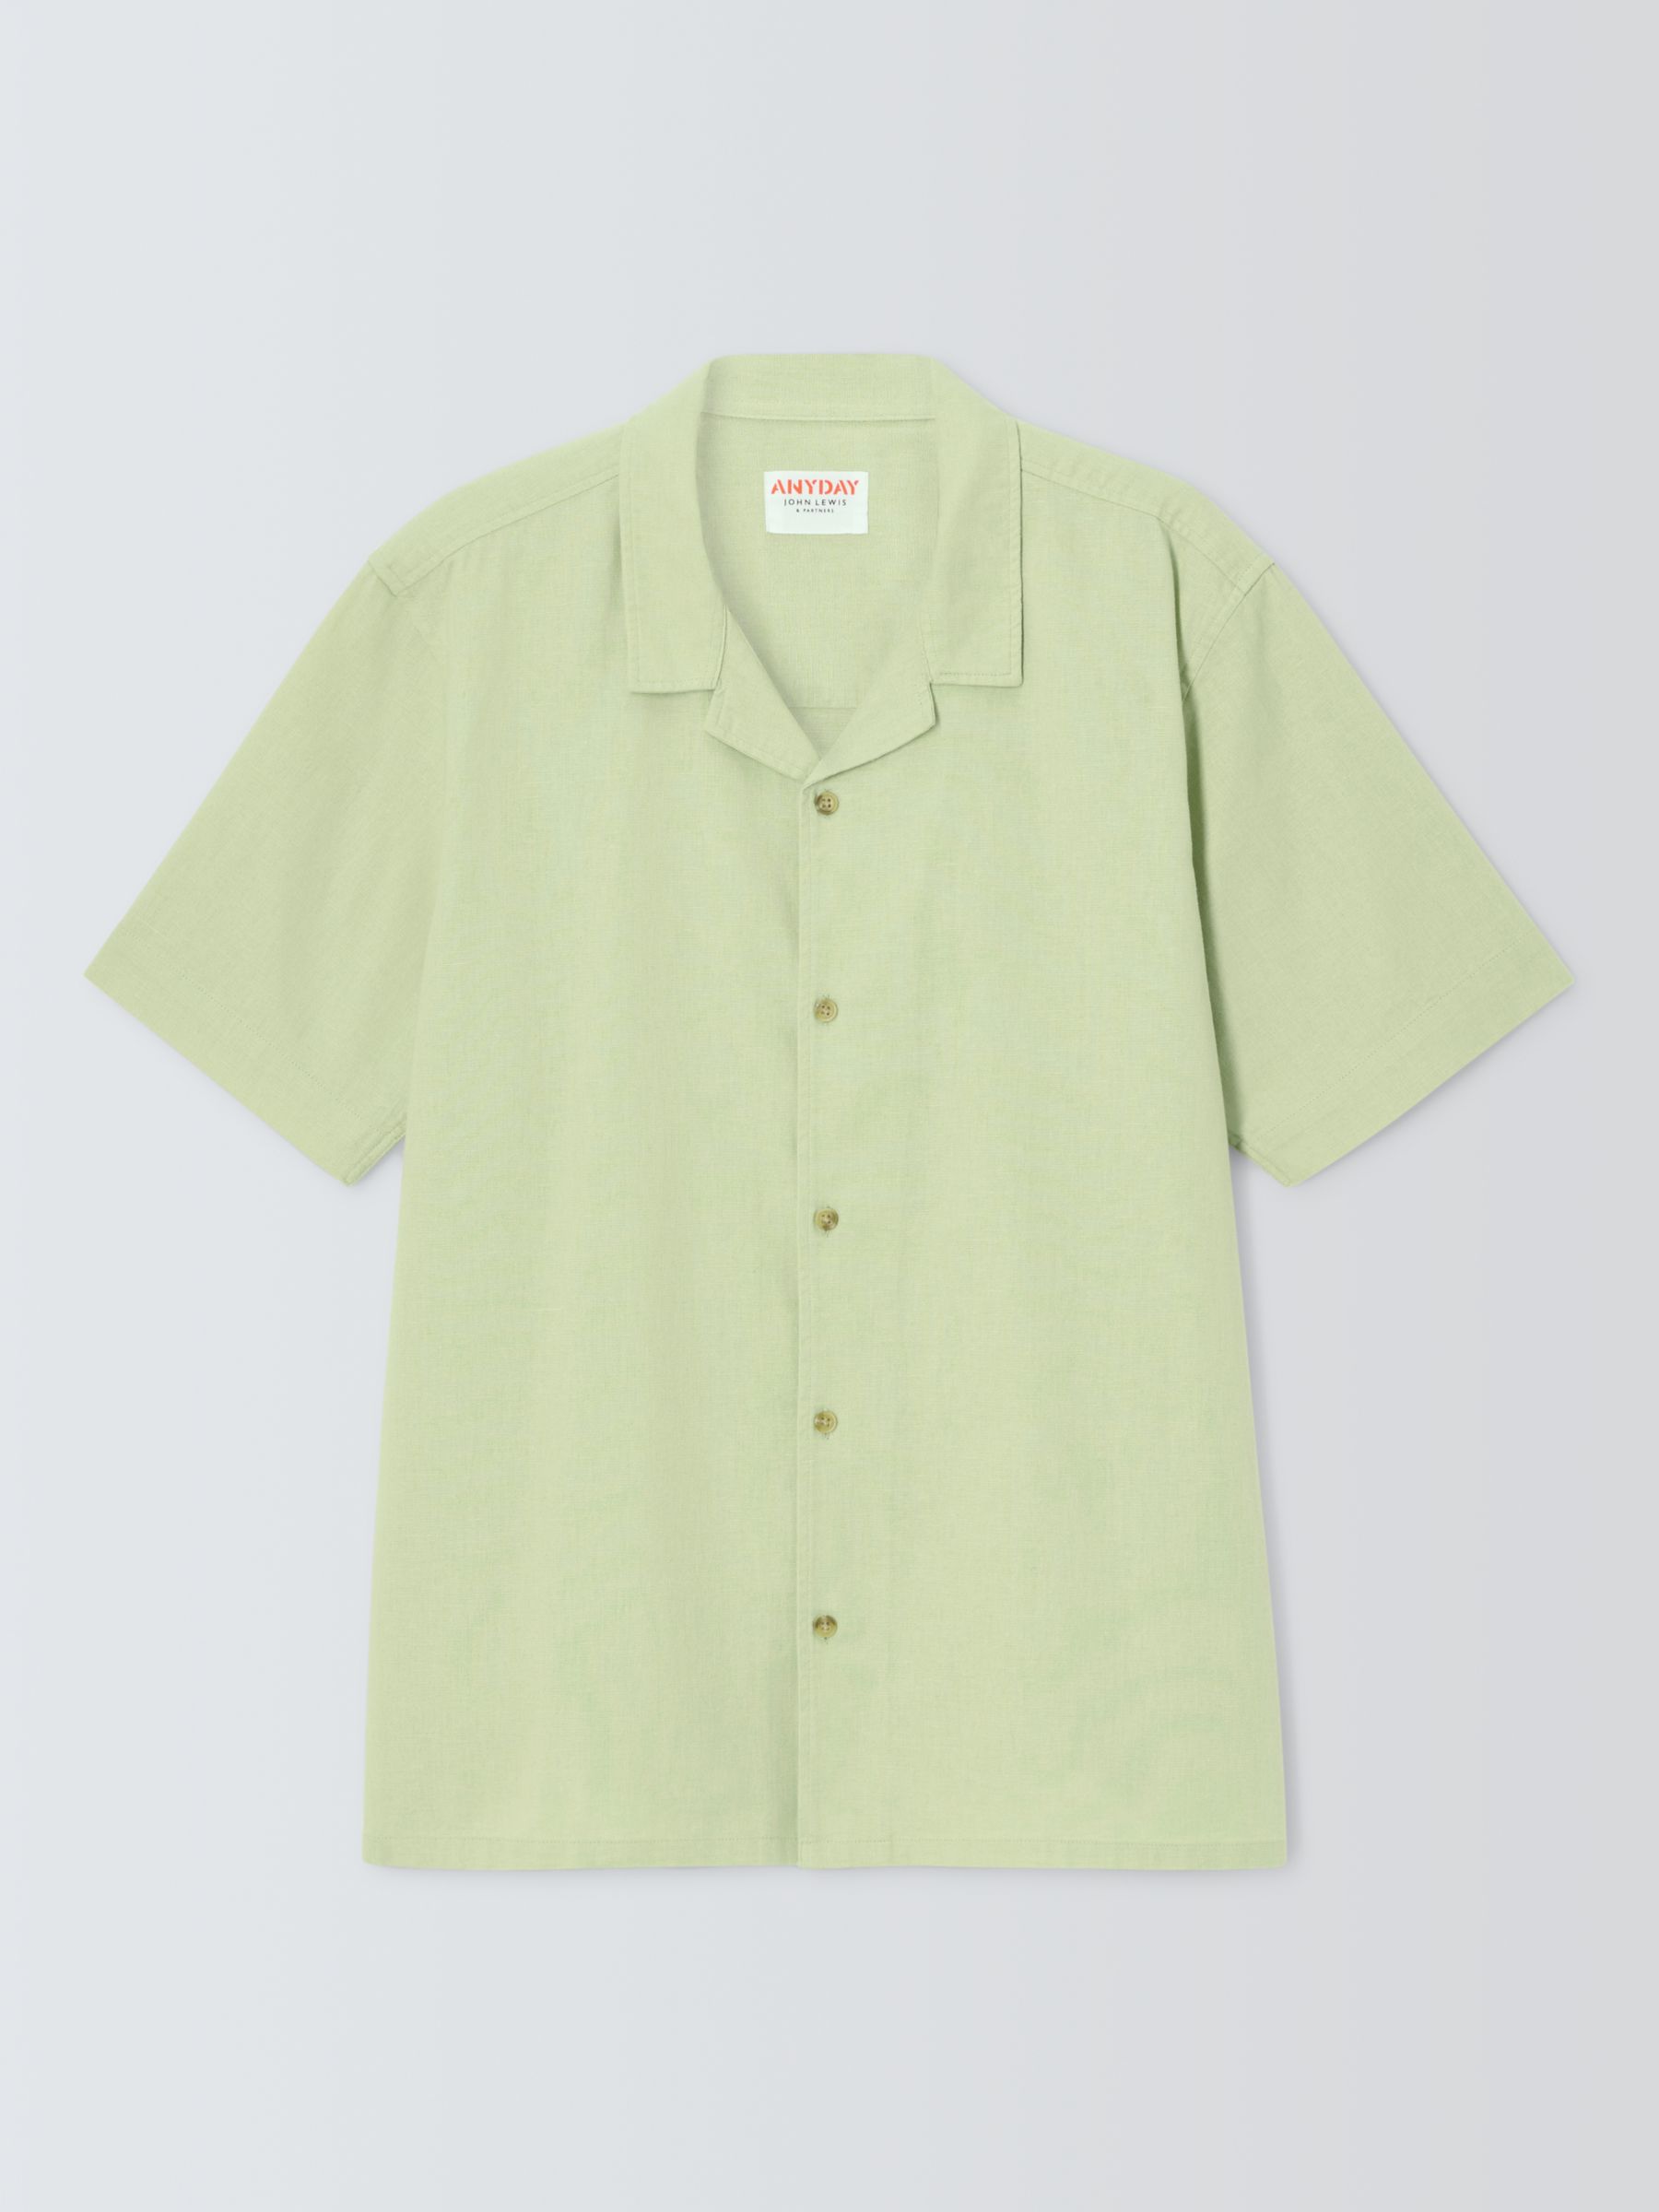 John Lewis ANYDAY Cotton & Linen Cuban Collar Shirt, Celadon Green, S